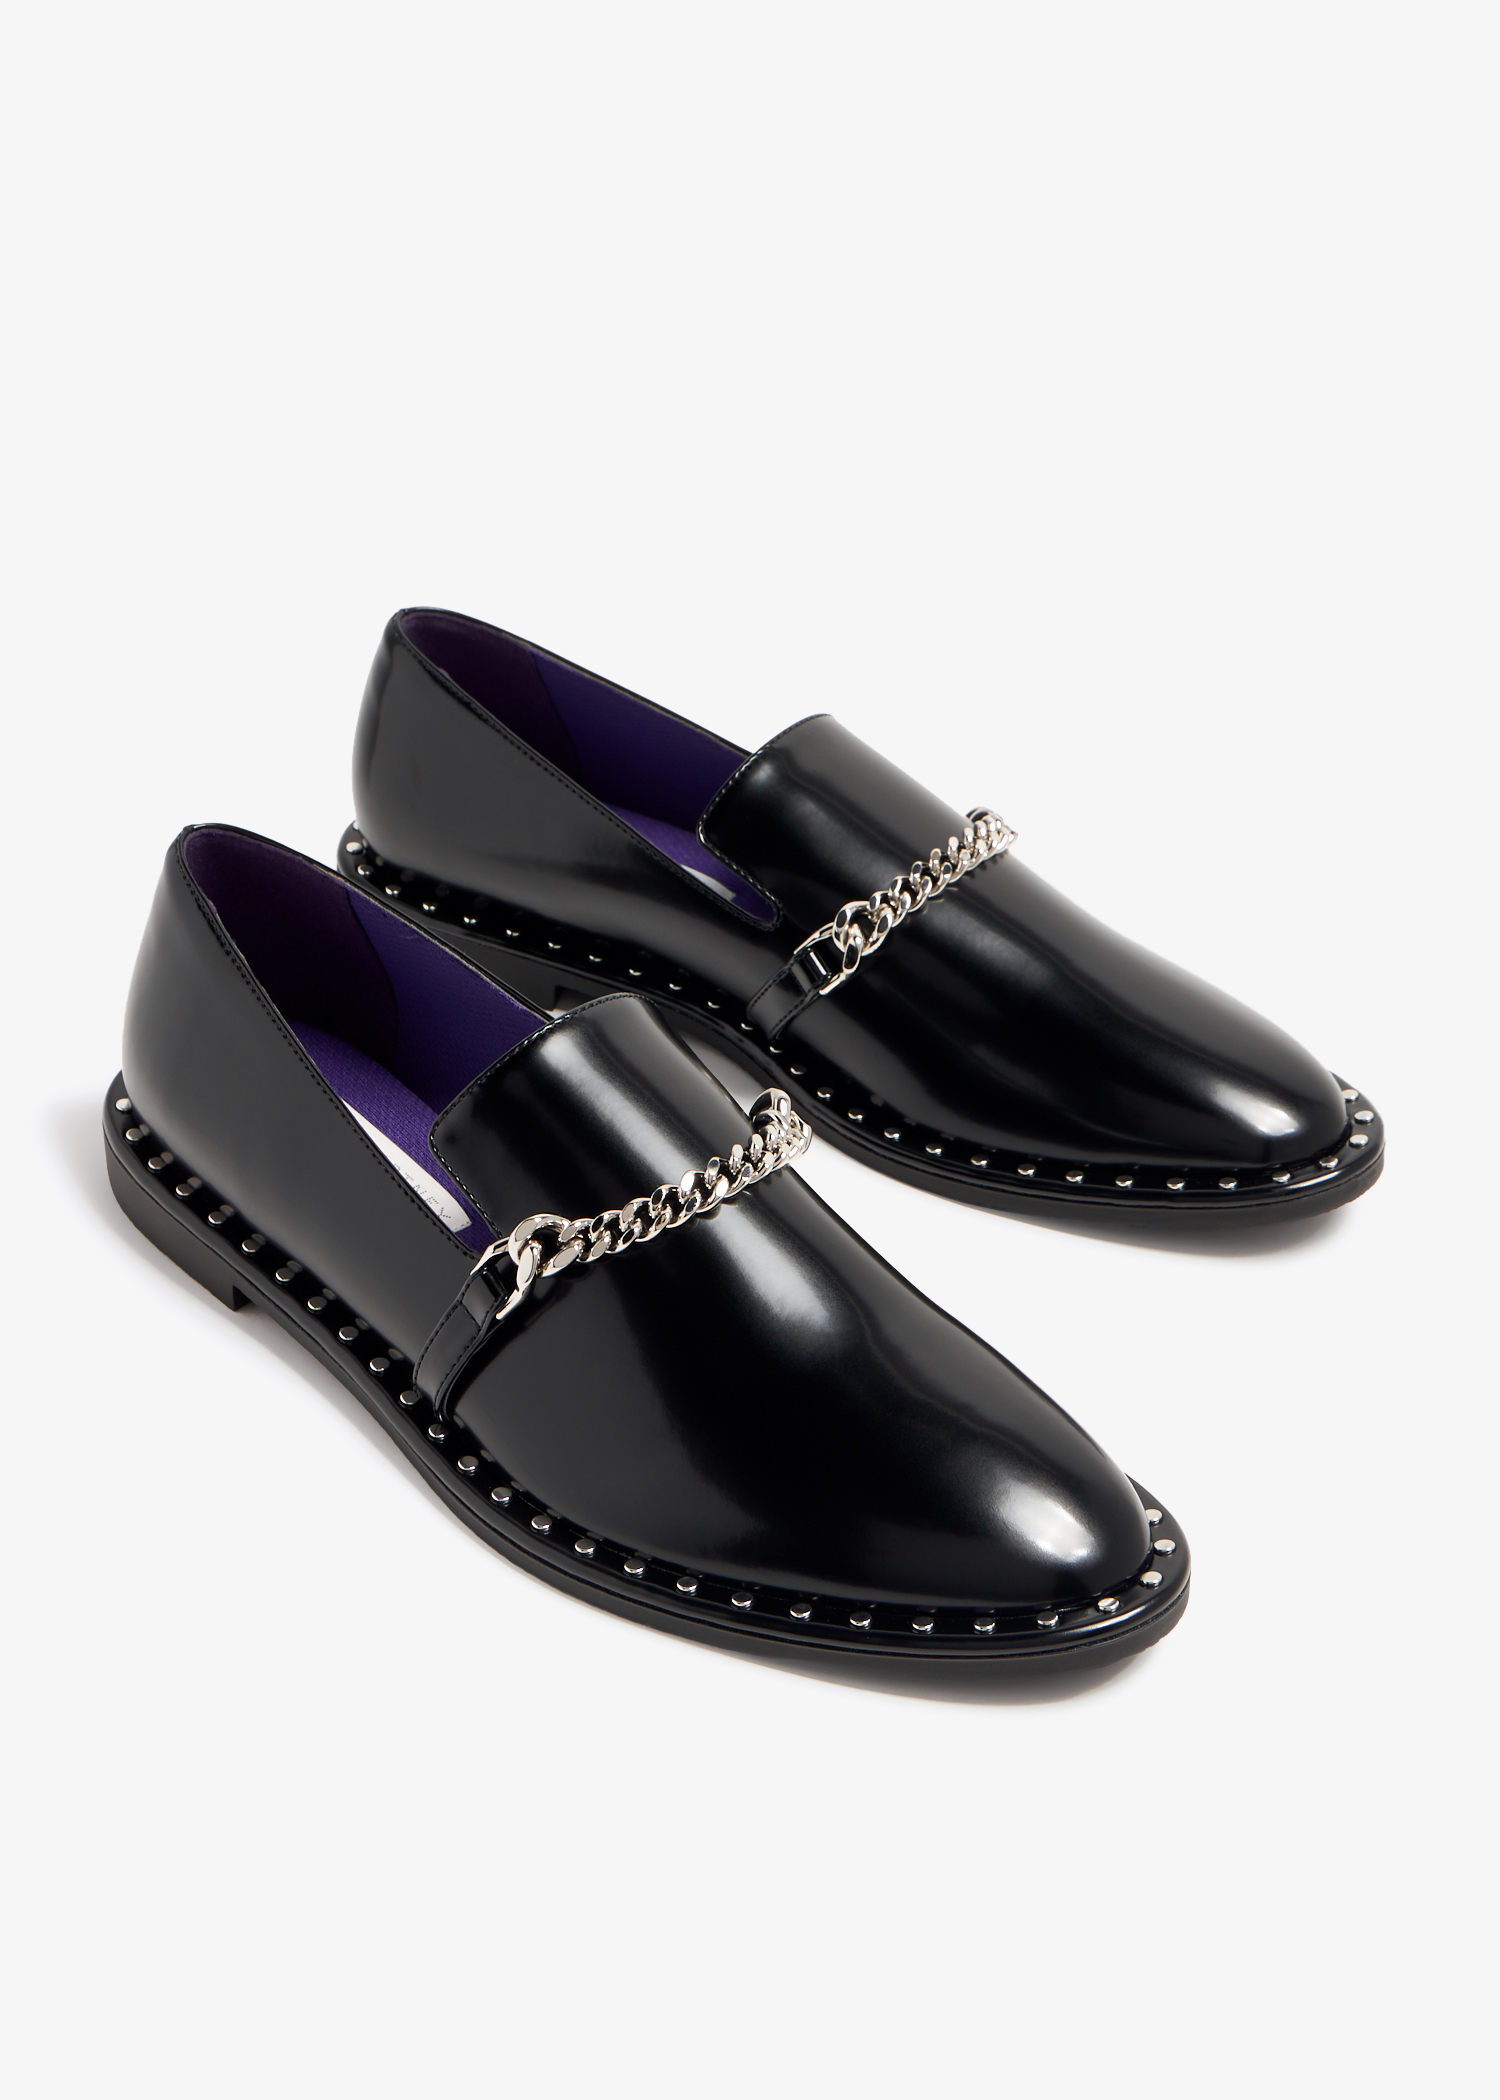 Stella McCartney Falabella loafers for Women - Black in UAE